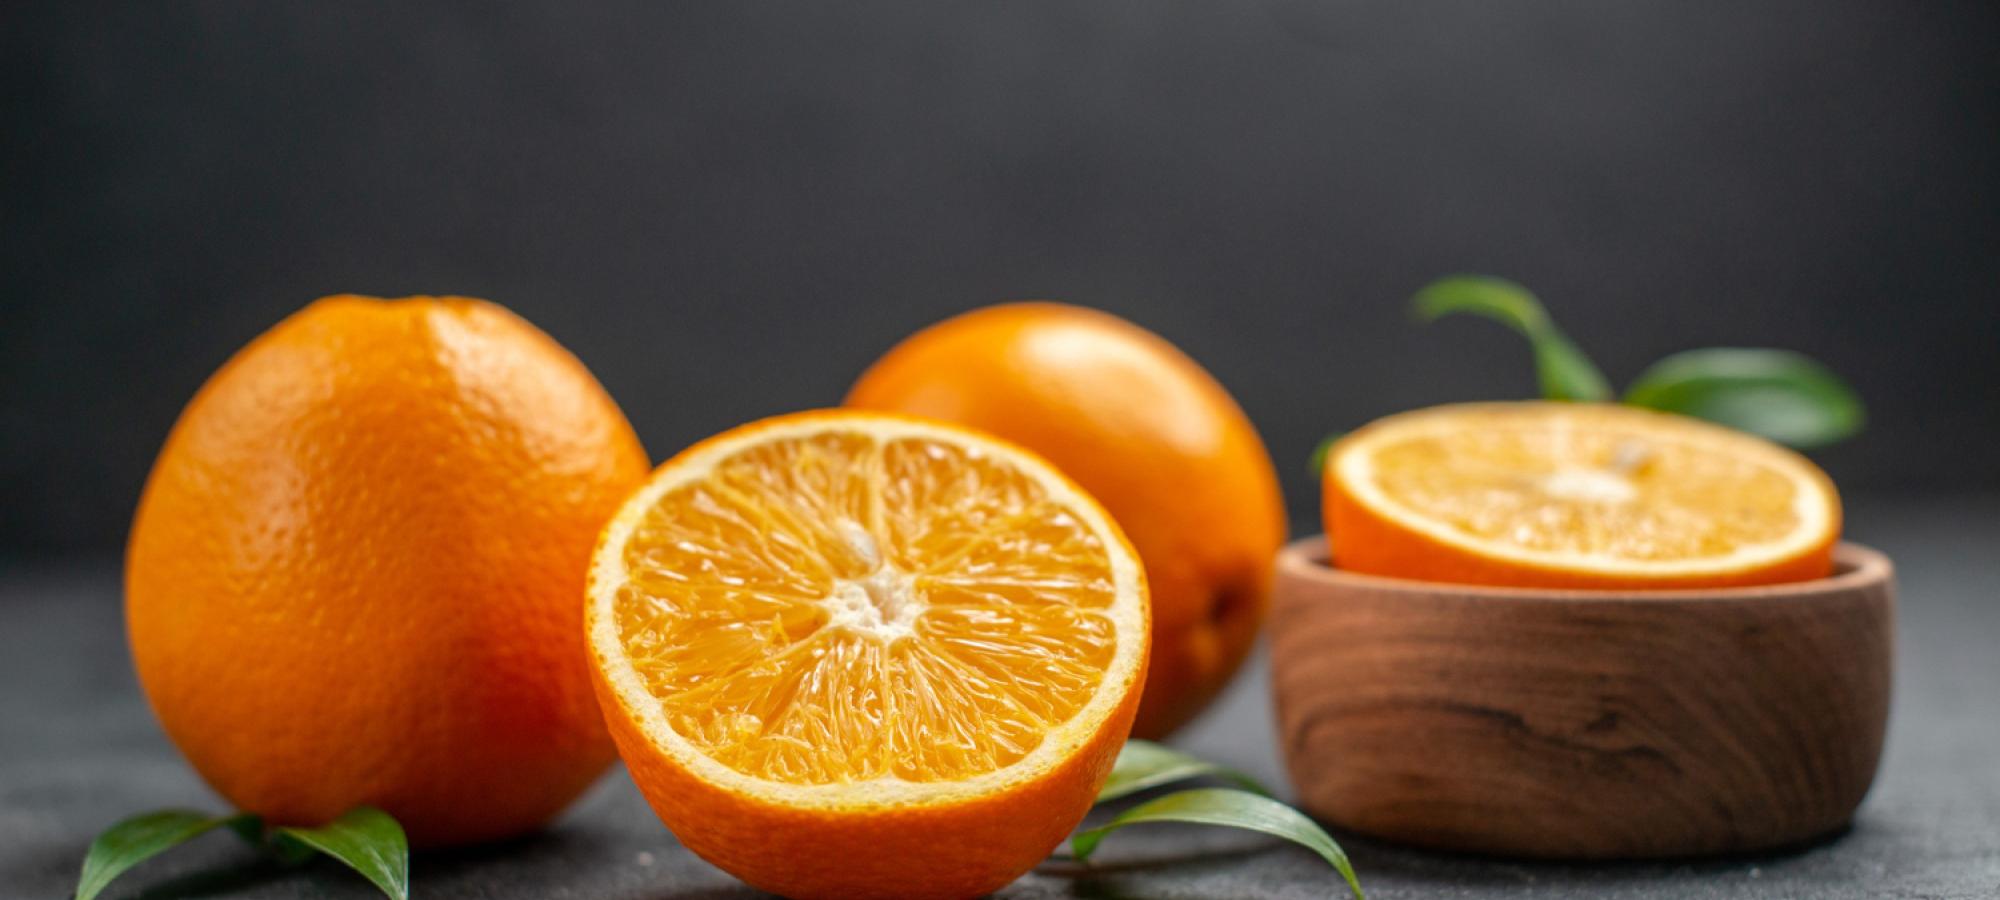 5 motivi per cui mangiare arance fa bene!